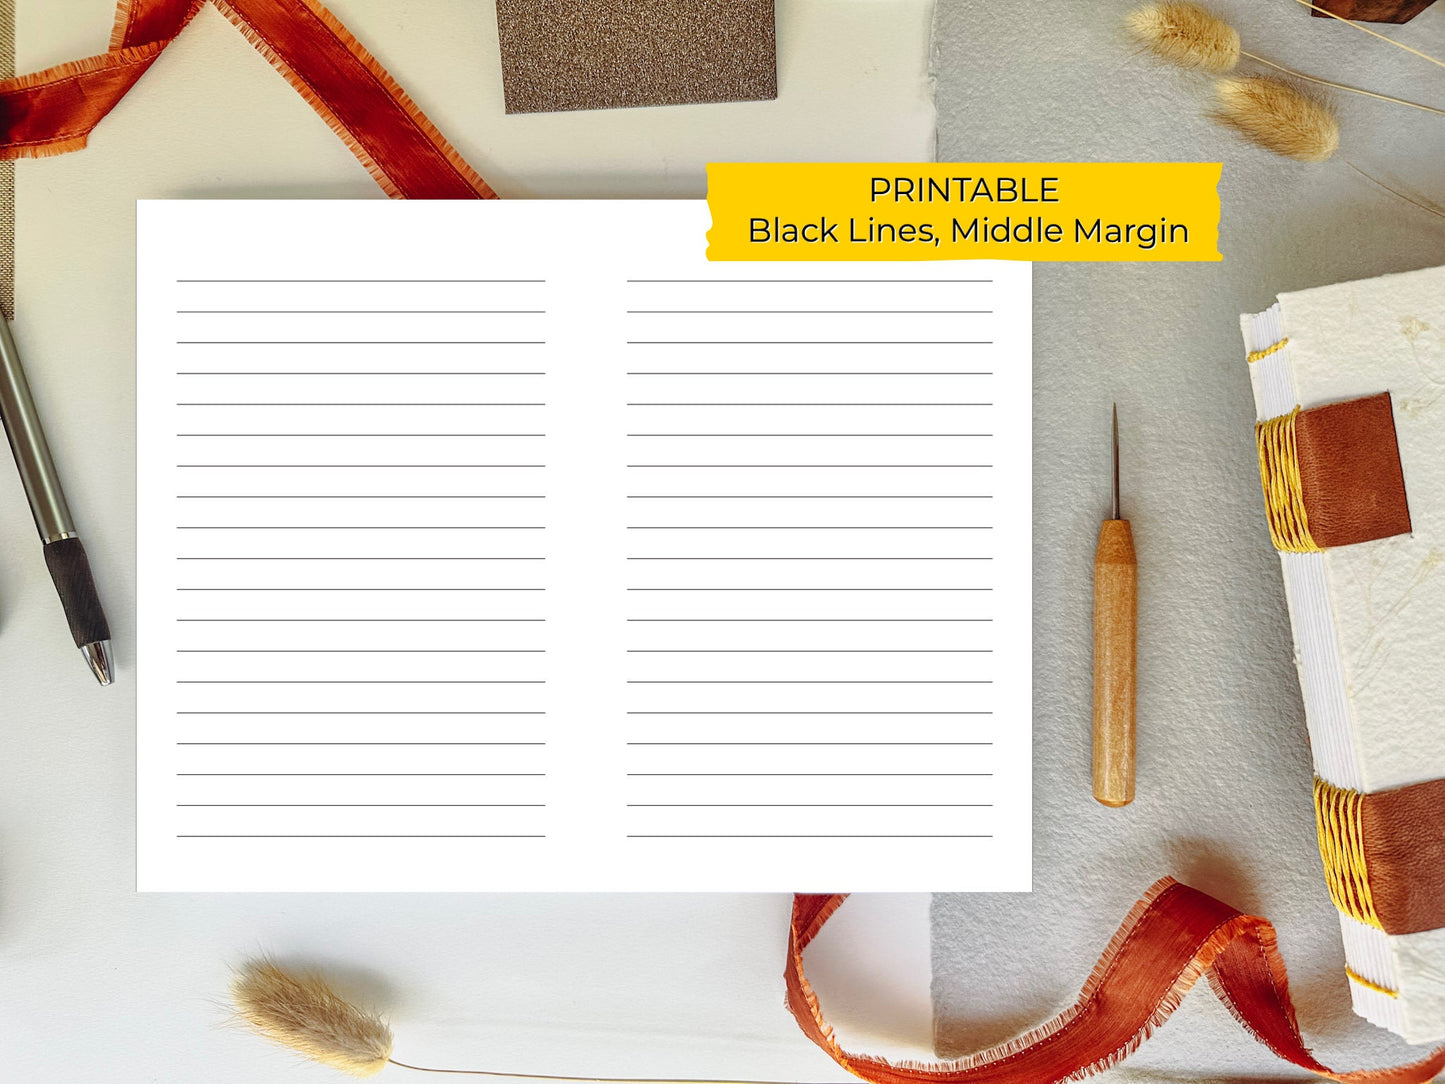 8.5 x 12 - Middle Margin LINED/RULED PRINTABLE Digital Book Binding Signature File - Black Lines